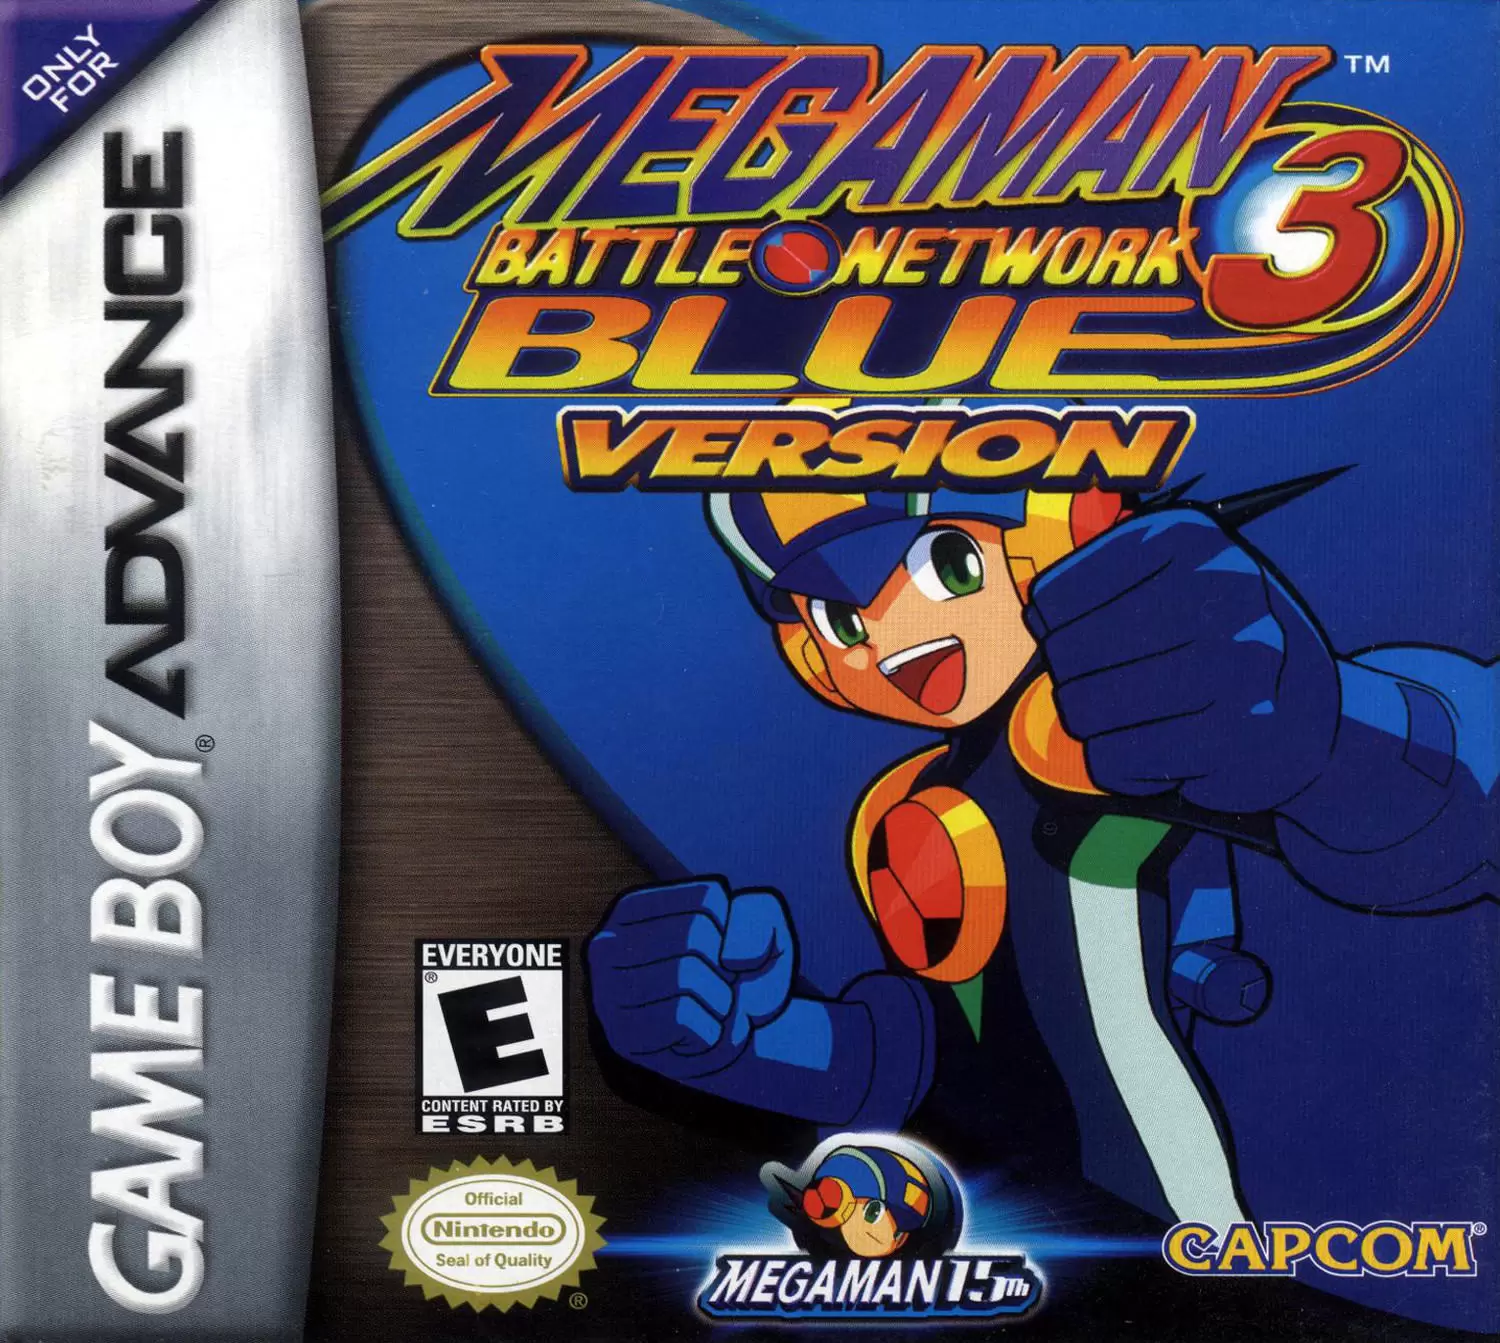 Game Boy Advance Games - Mega Man Battle Network 3: Blue Version